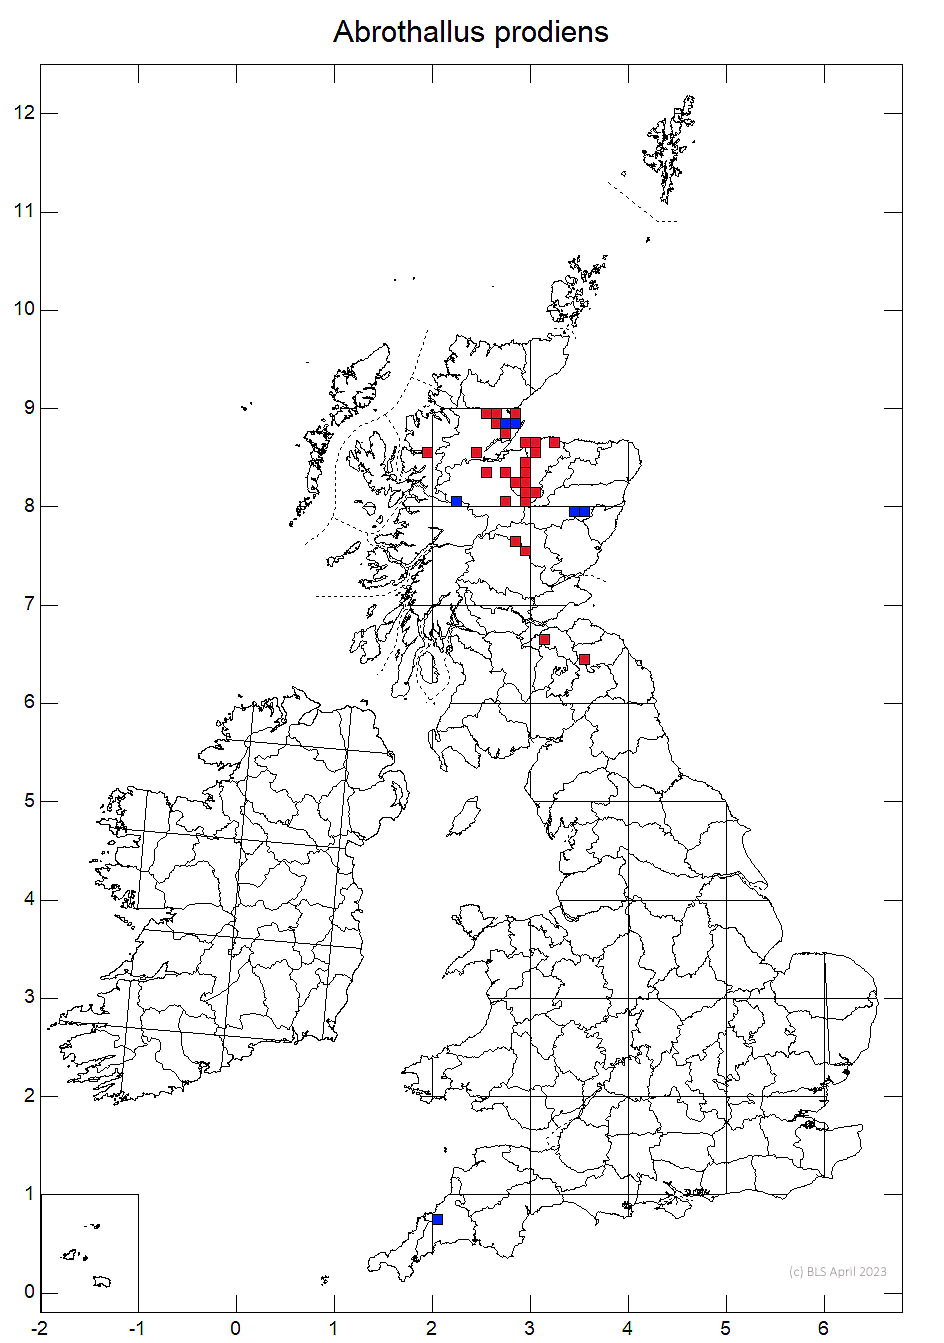 Abrothallus prodiens 10km sq distribution map